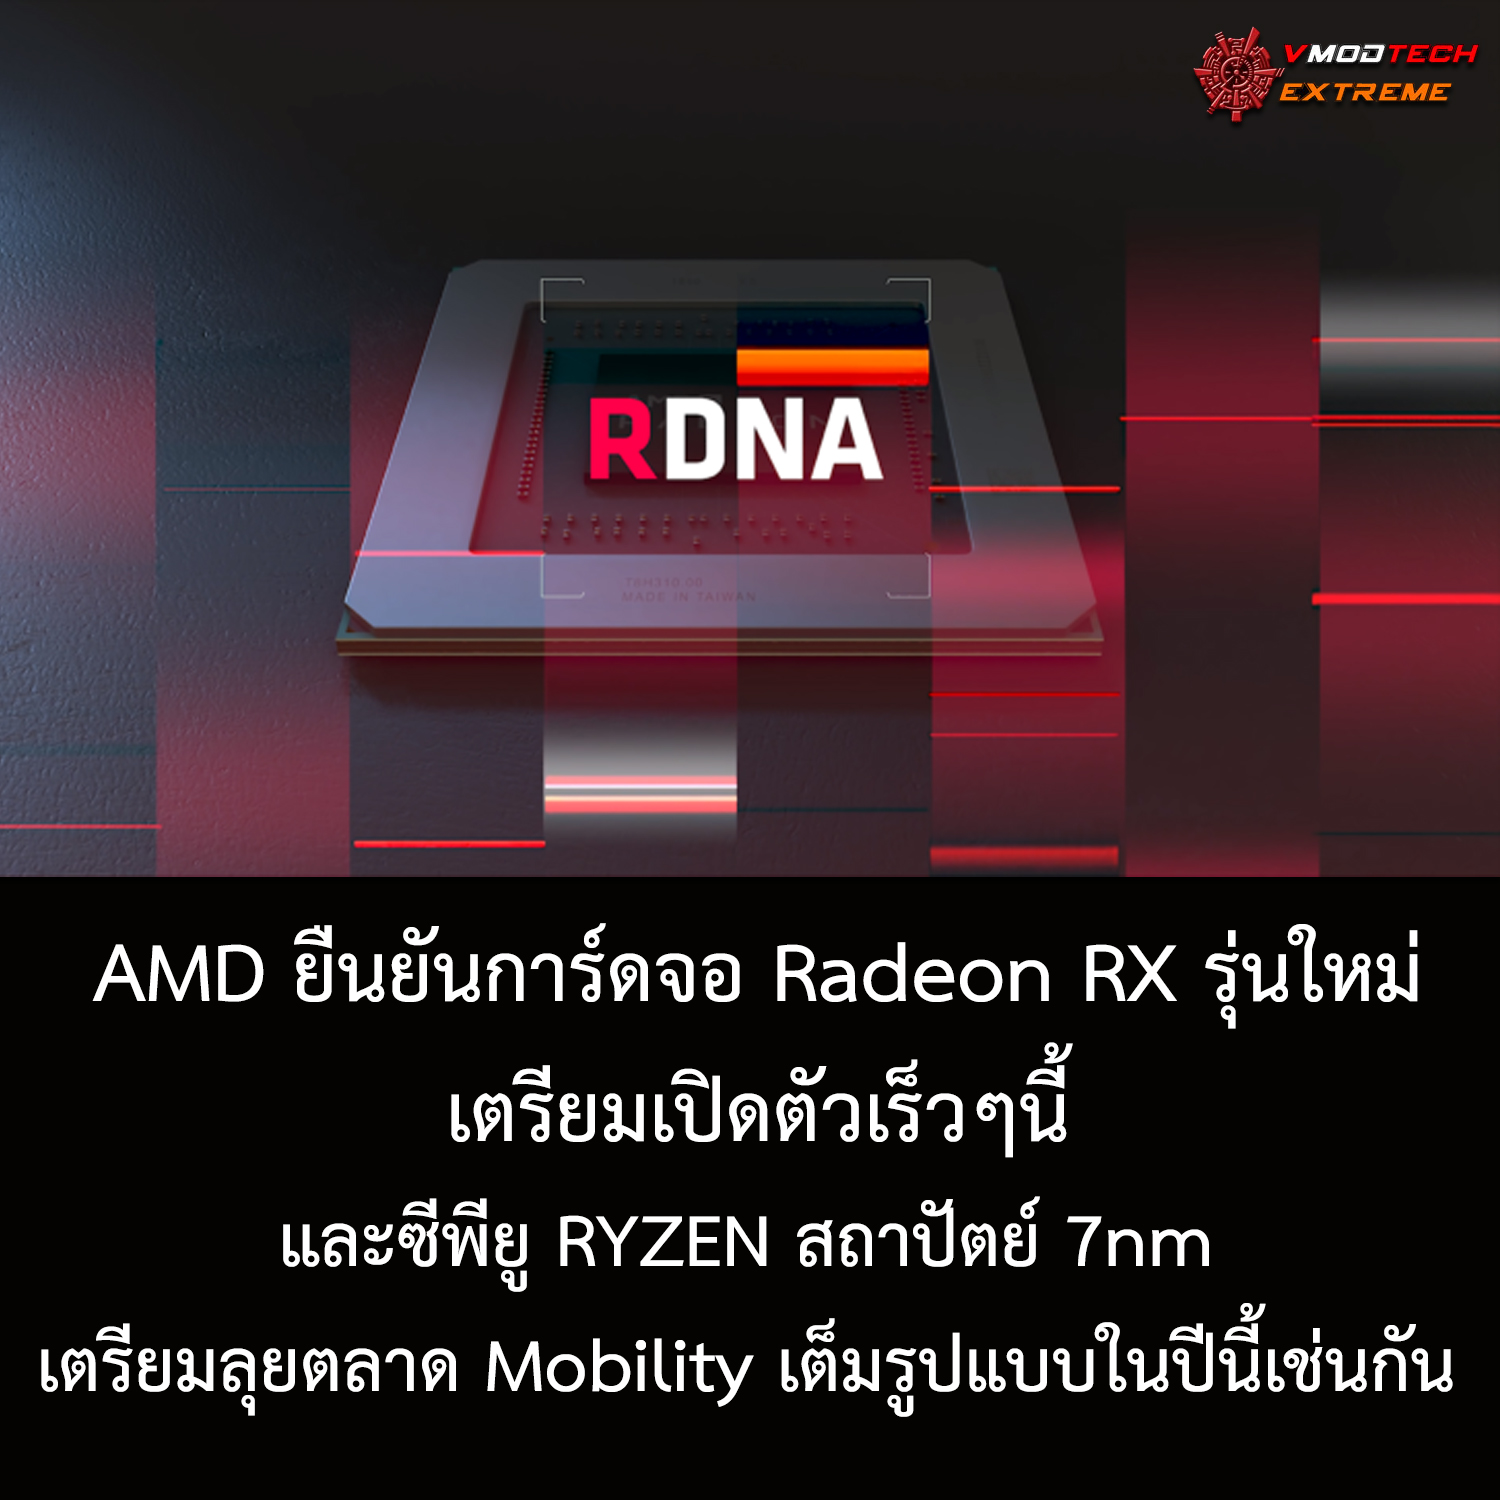 radeon rx5000 navi ยังไม่หยุด!! CEO ทางฝั่ง AMD ยืนยันการ์ดจอ Radeon RX รุ่นใหม่ระดับ Hi End เตรียมเปิดตัวเร็วๆนี้และซีพียู RYZEN สถาปัตย์ 7nm เตรียมลุยตลาด Mobility เต็มรูปแบบในปีนี้เช่นกัน 